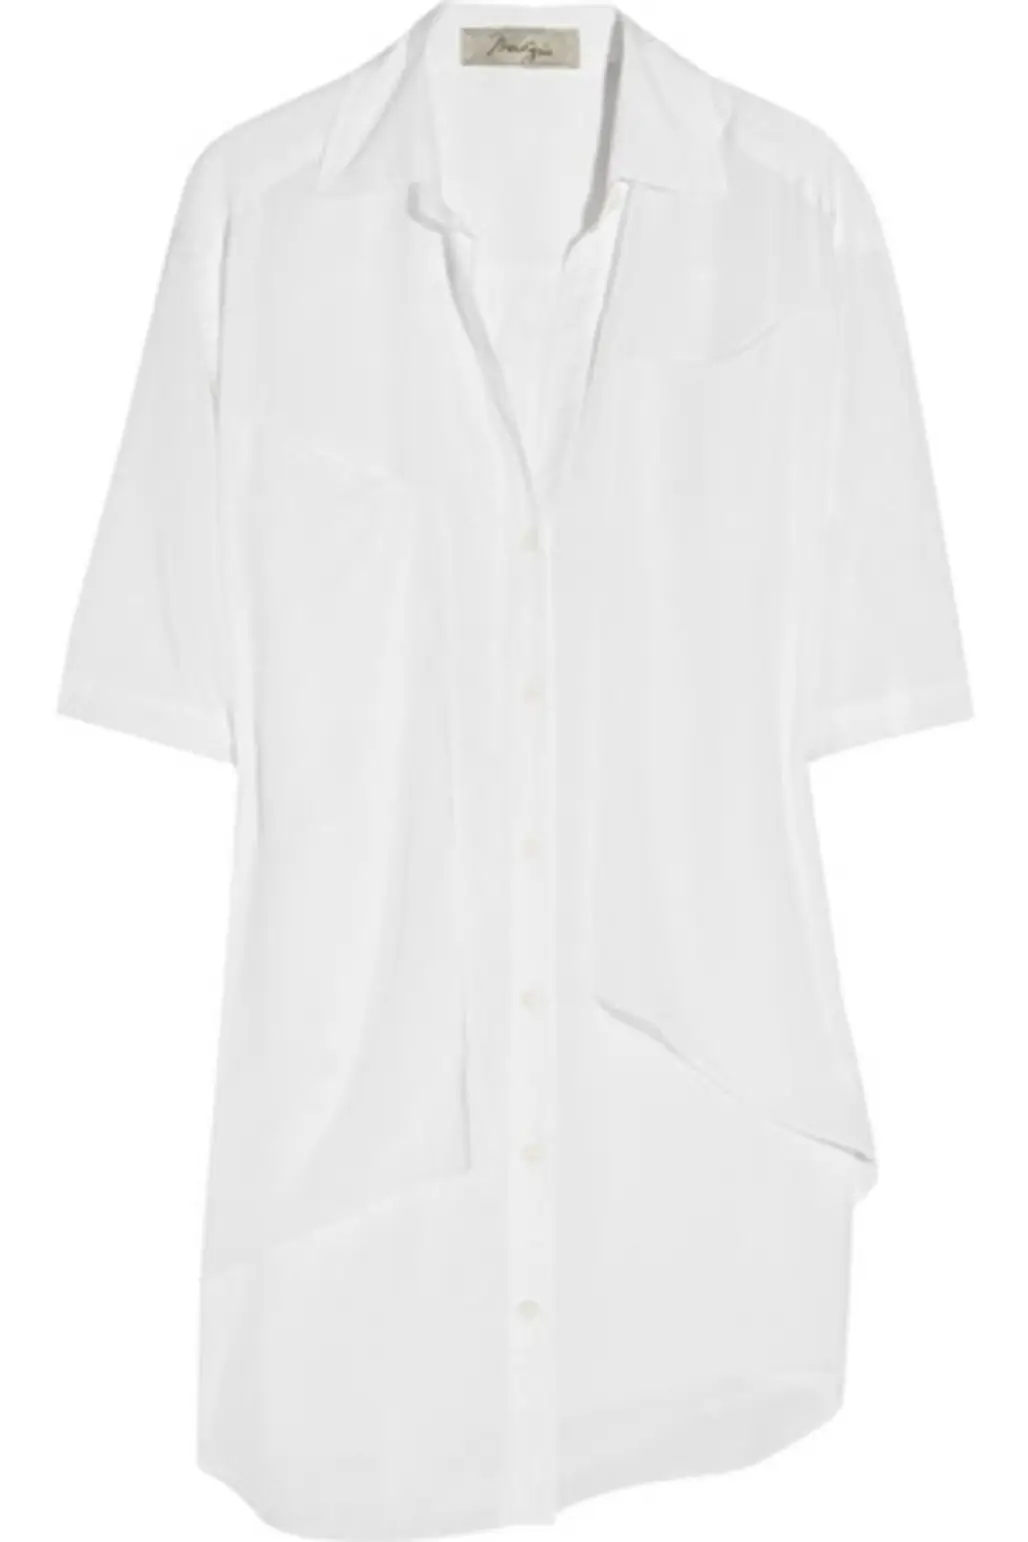 Max Azria Silk-chiffon Paneled Cotton-blend Shirt